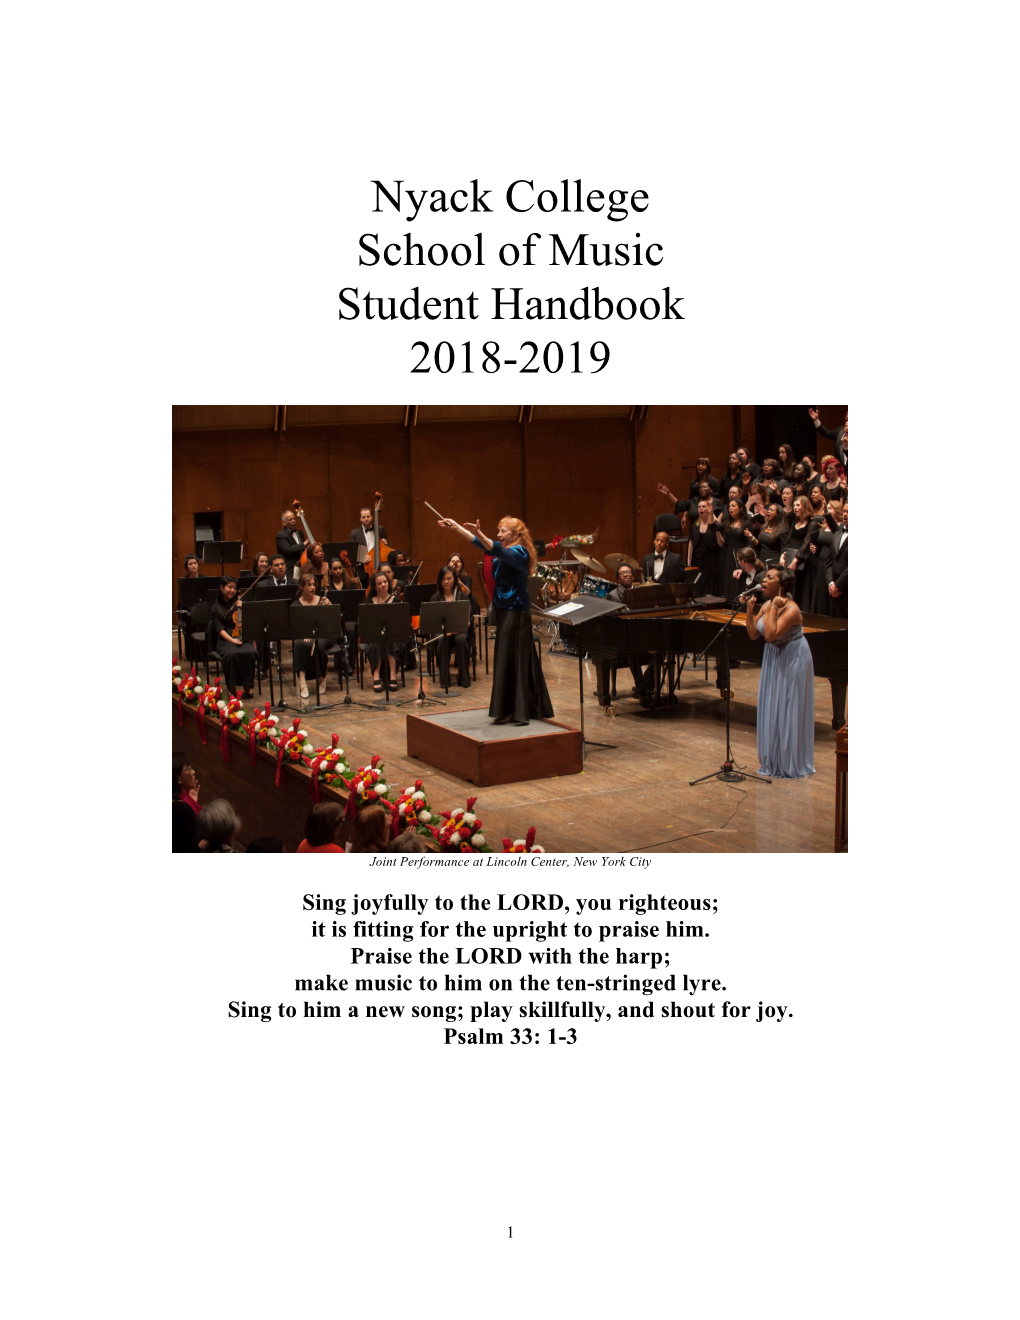 Nyack College School of Music Student Handbook 2018-2019